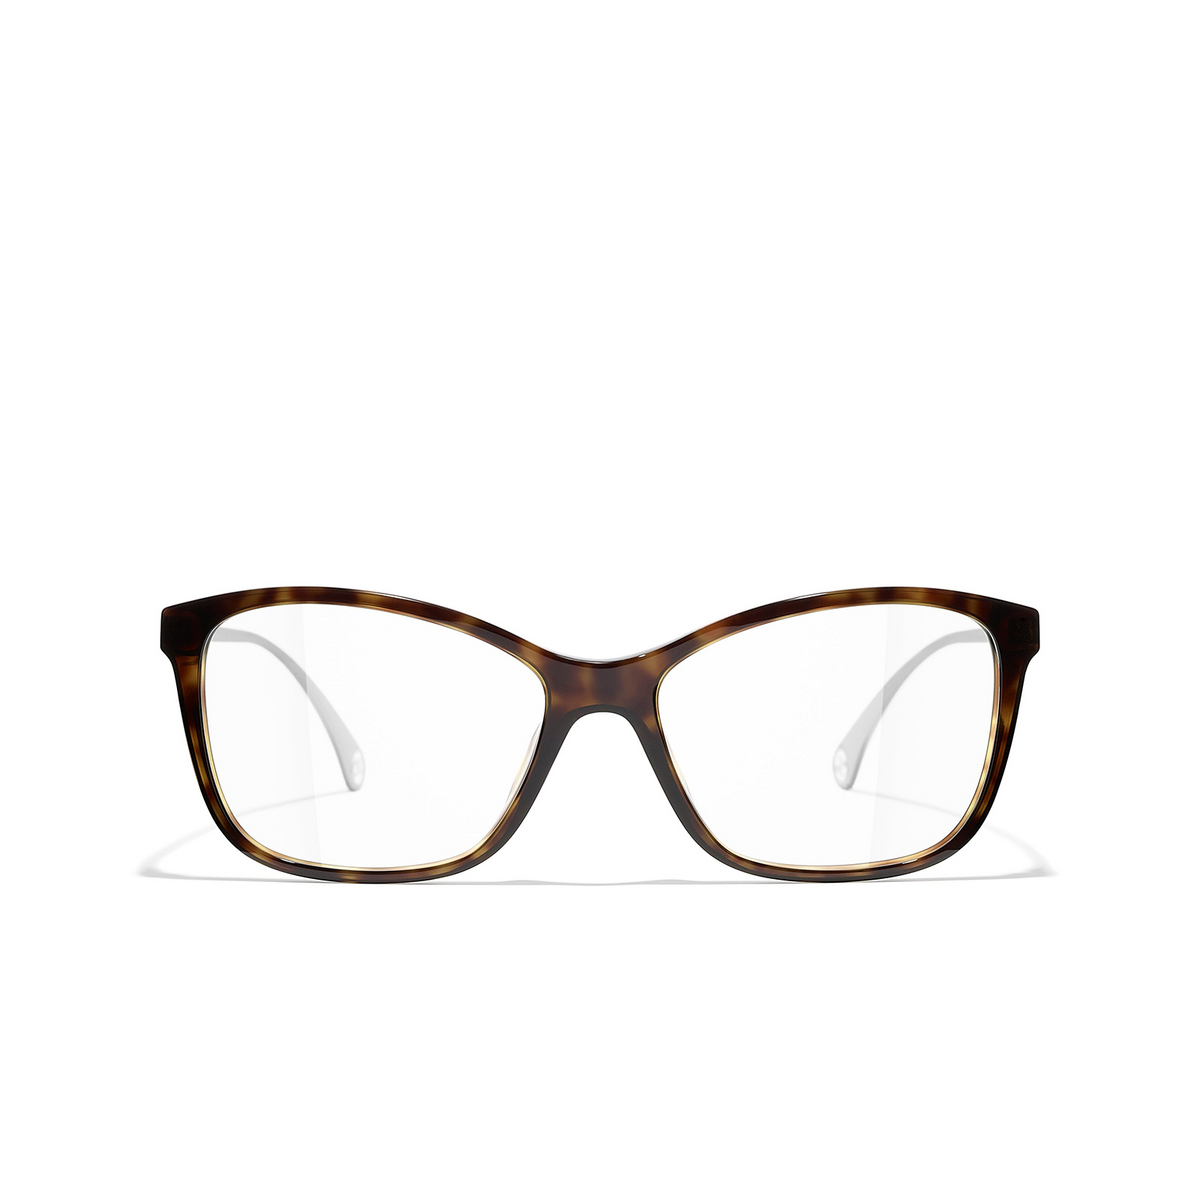 CHANEL rectangle Eyeglasses C714 Dark Tortoise - front view